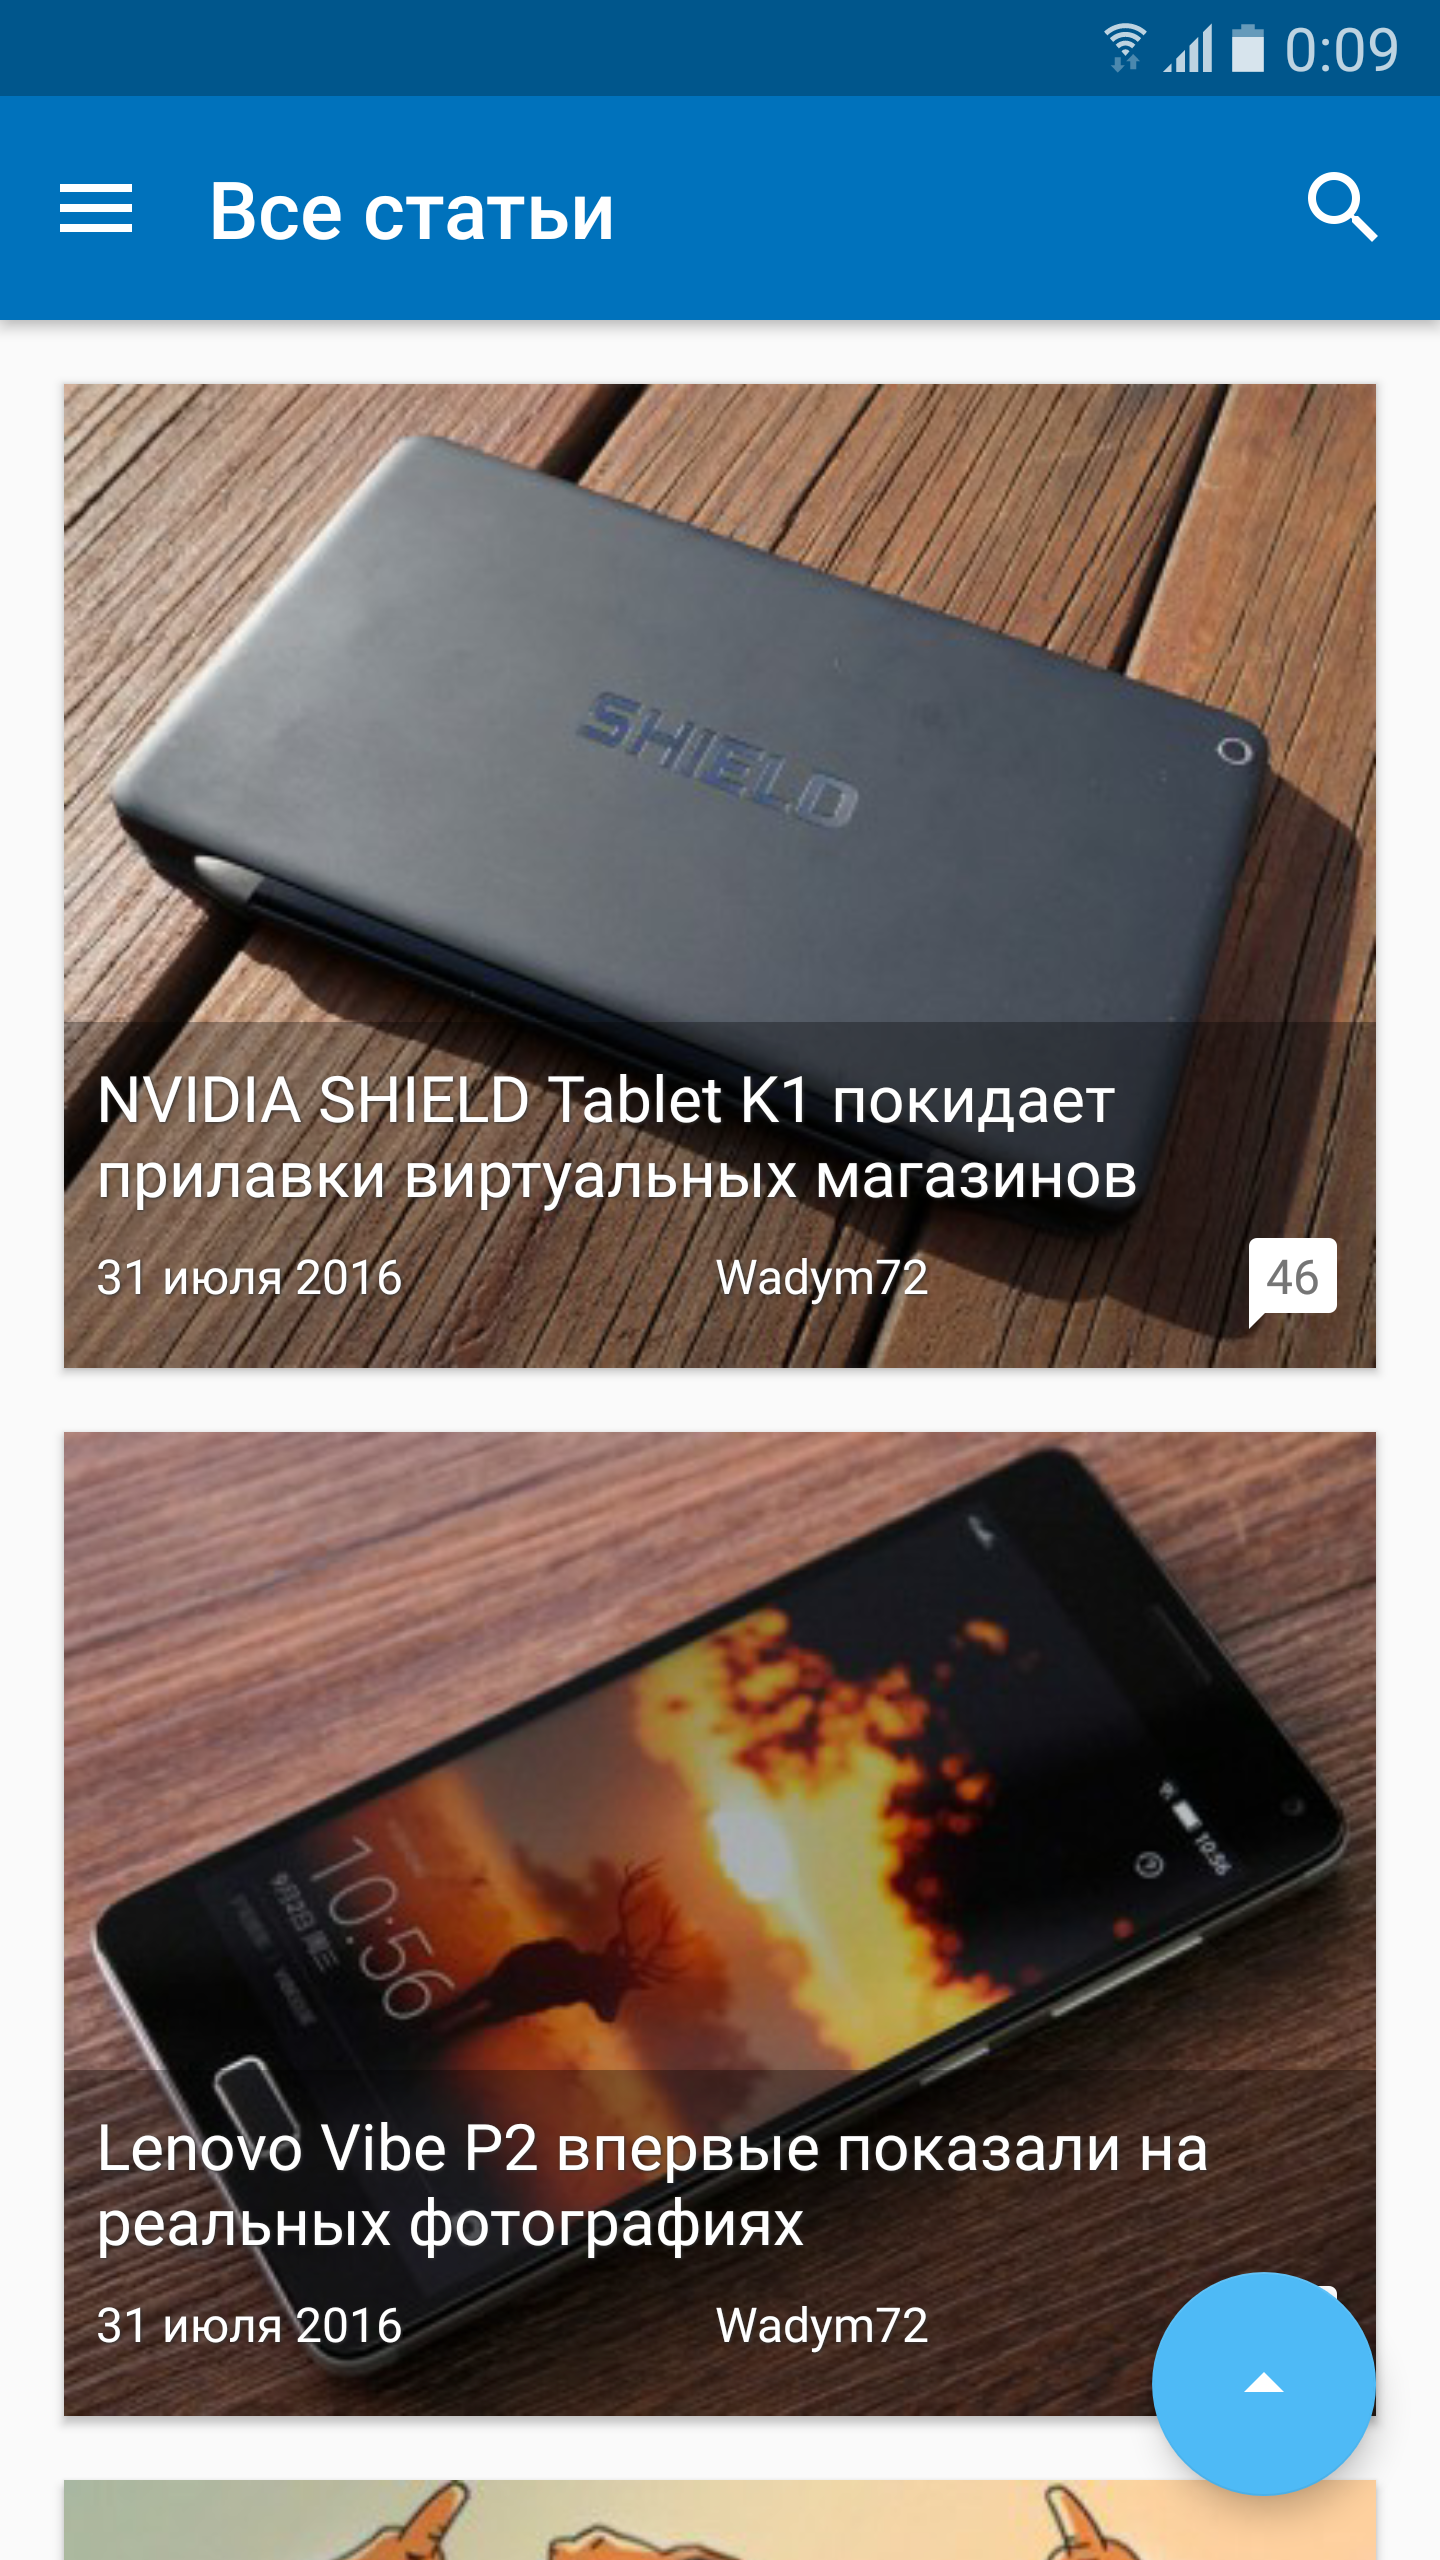 Android application 4PDA Новости screenshort